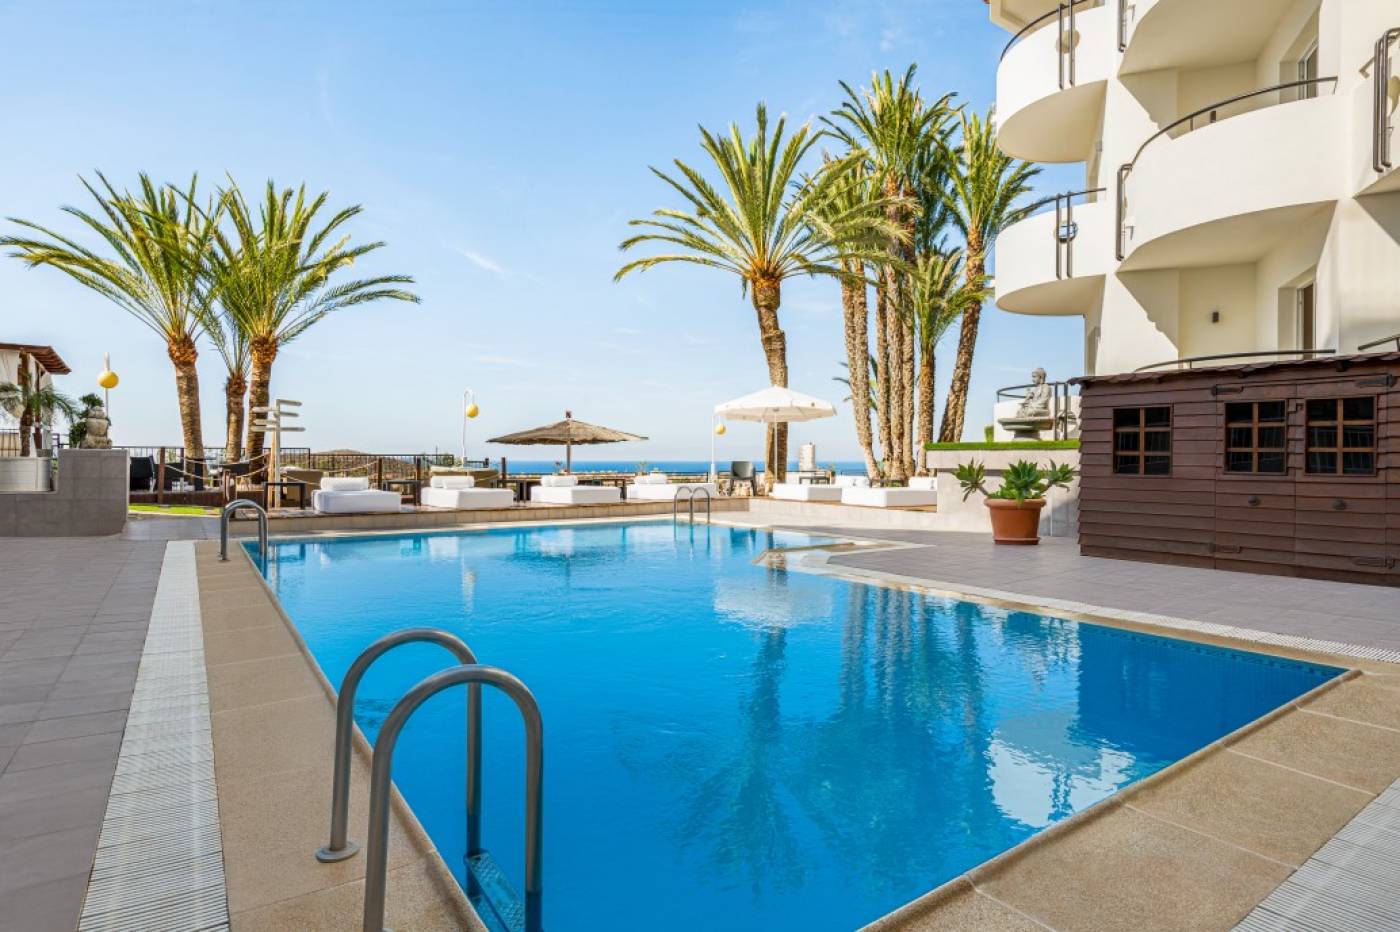 Ramada Resort by Wyndham premier hotel in Puerto de Mazarron